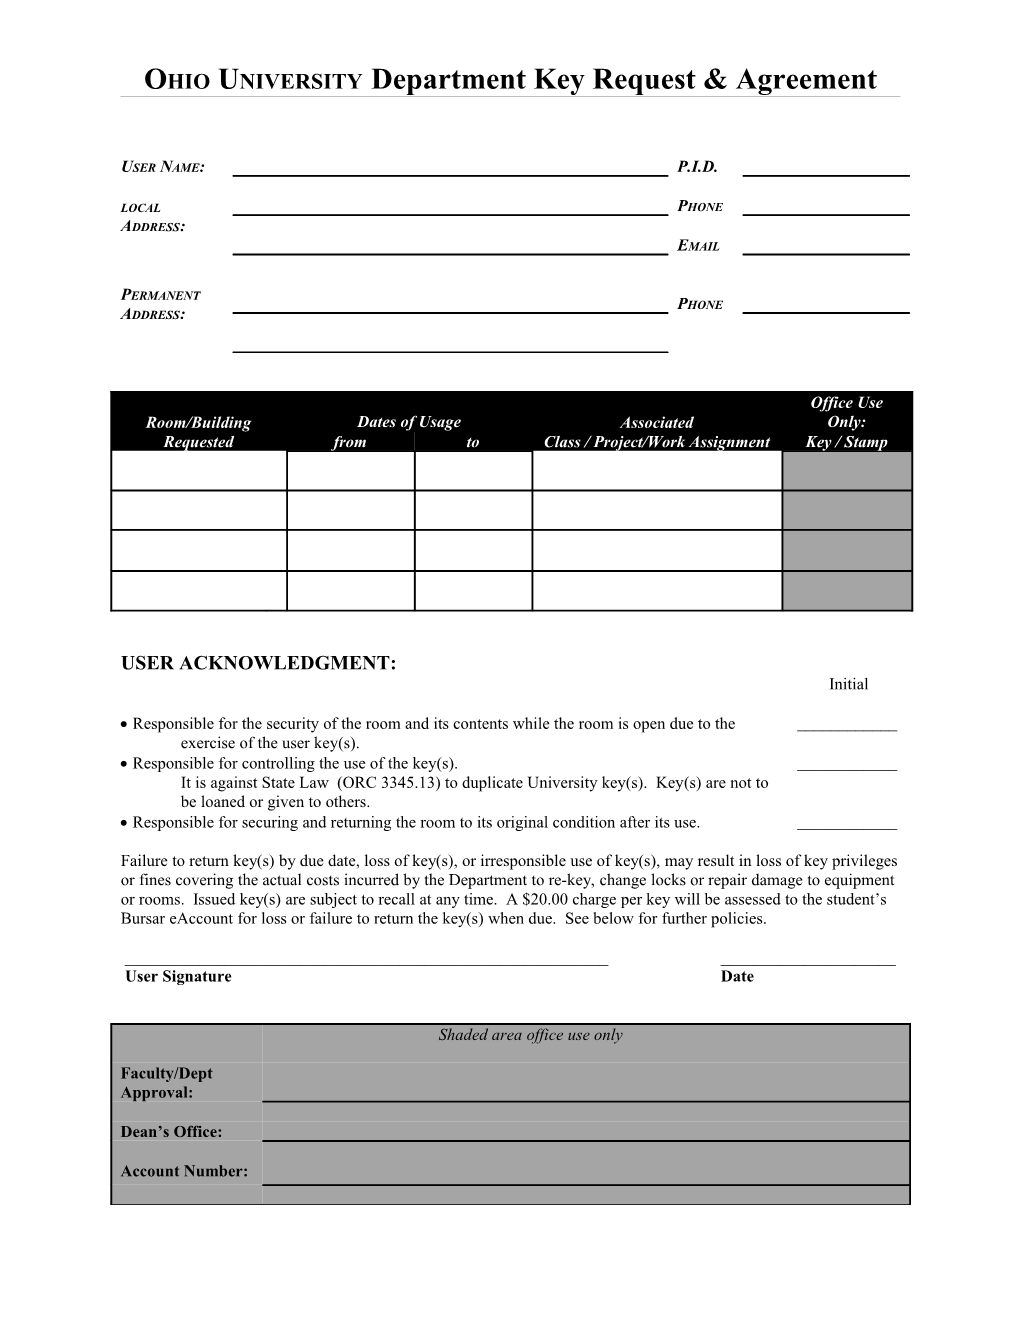 OHIO UNIVERSITY Department Key Request & Agreement